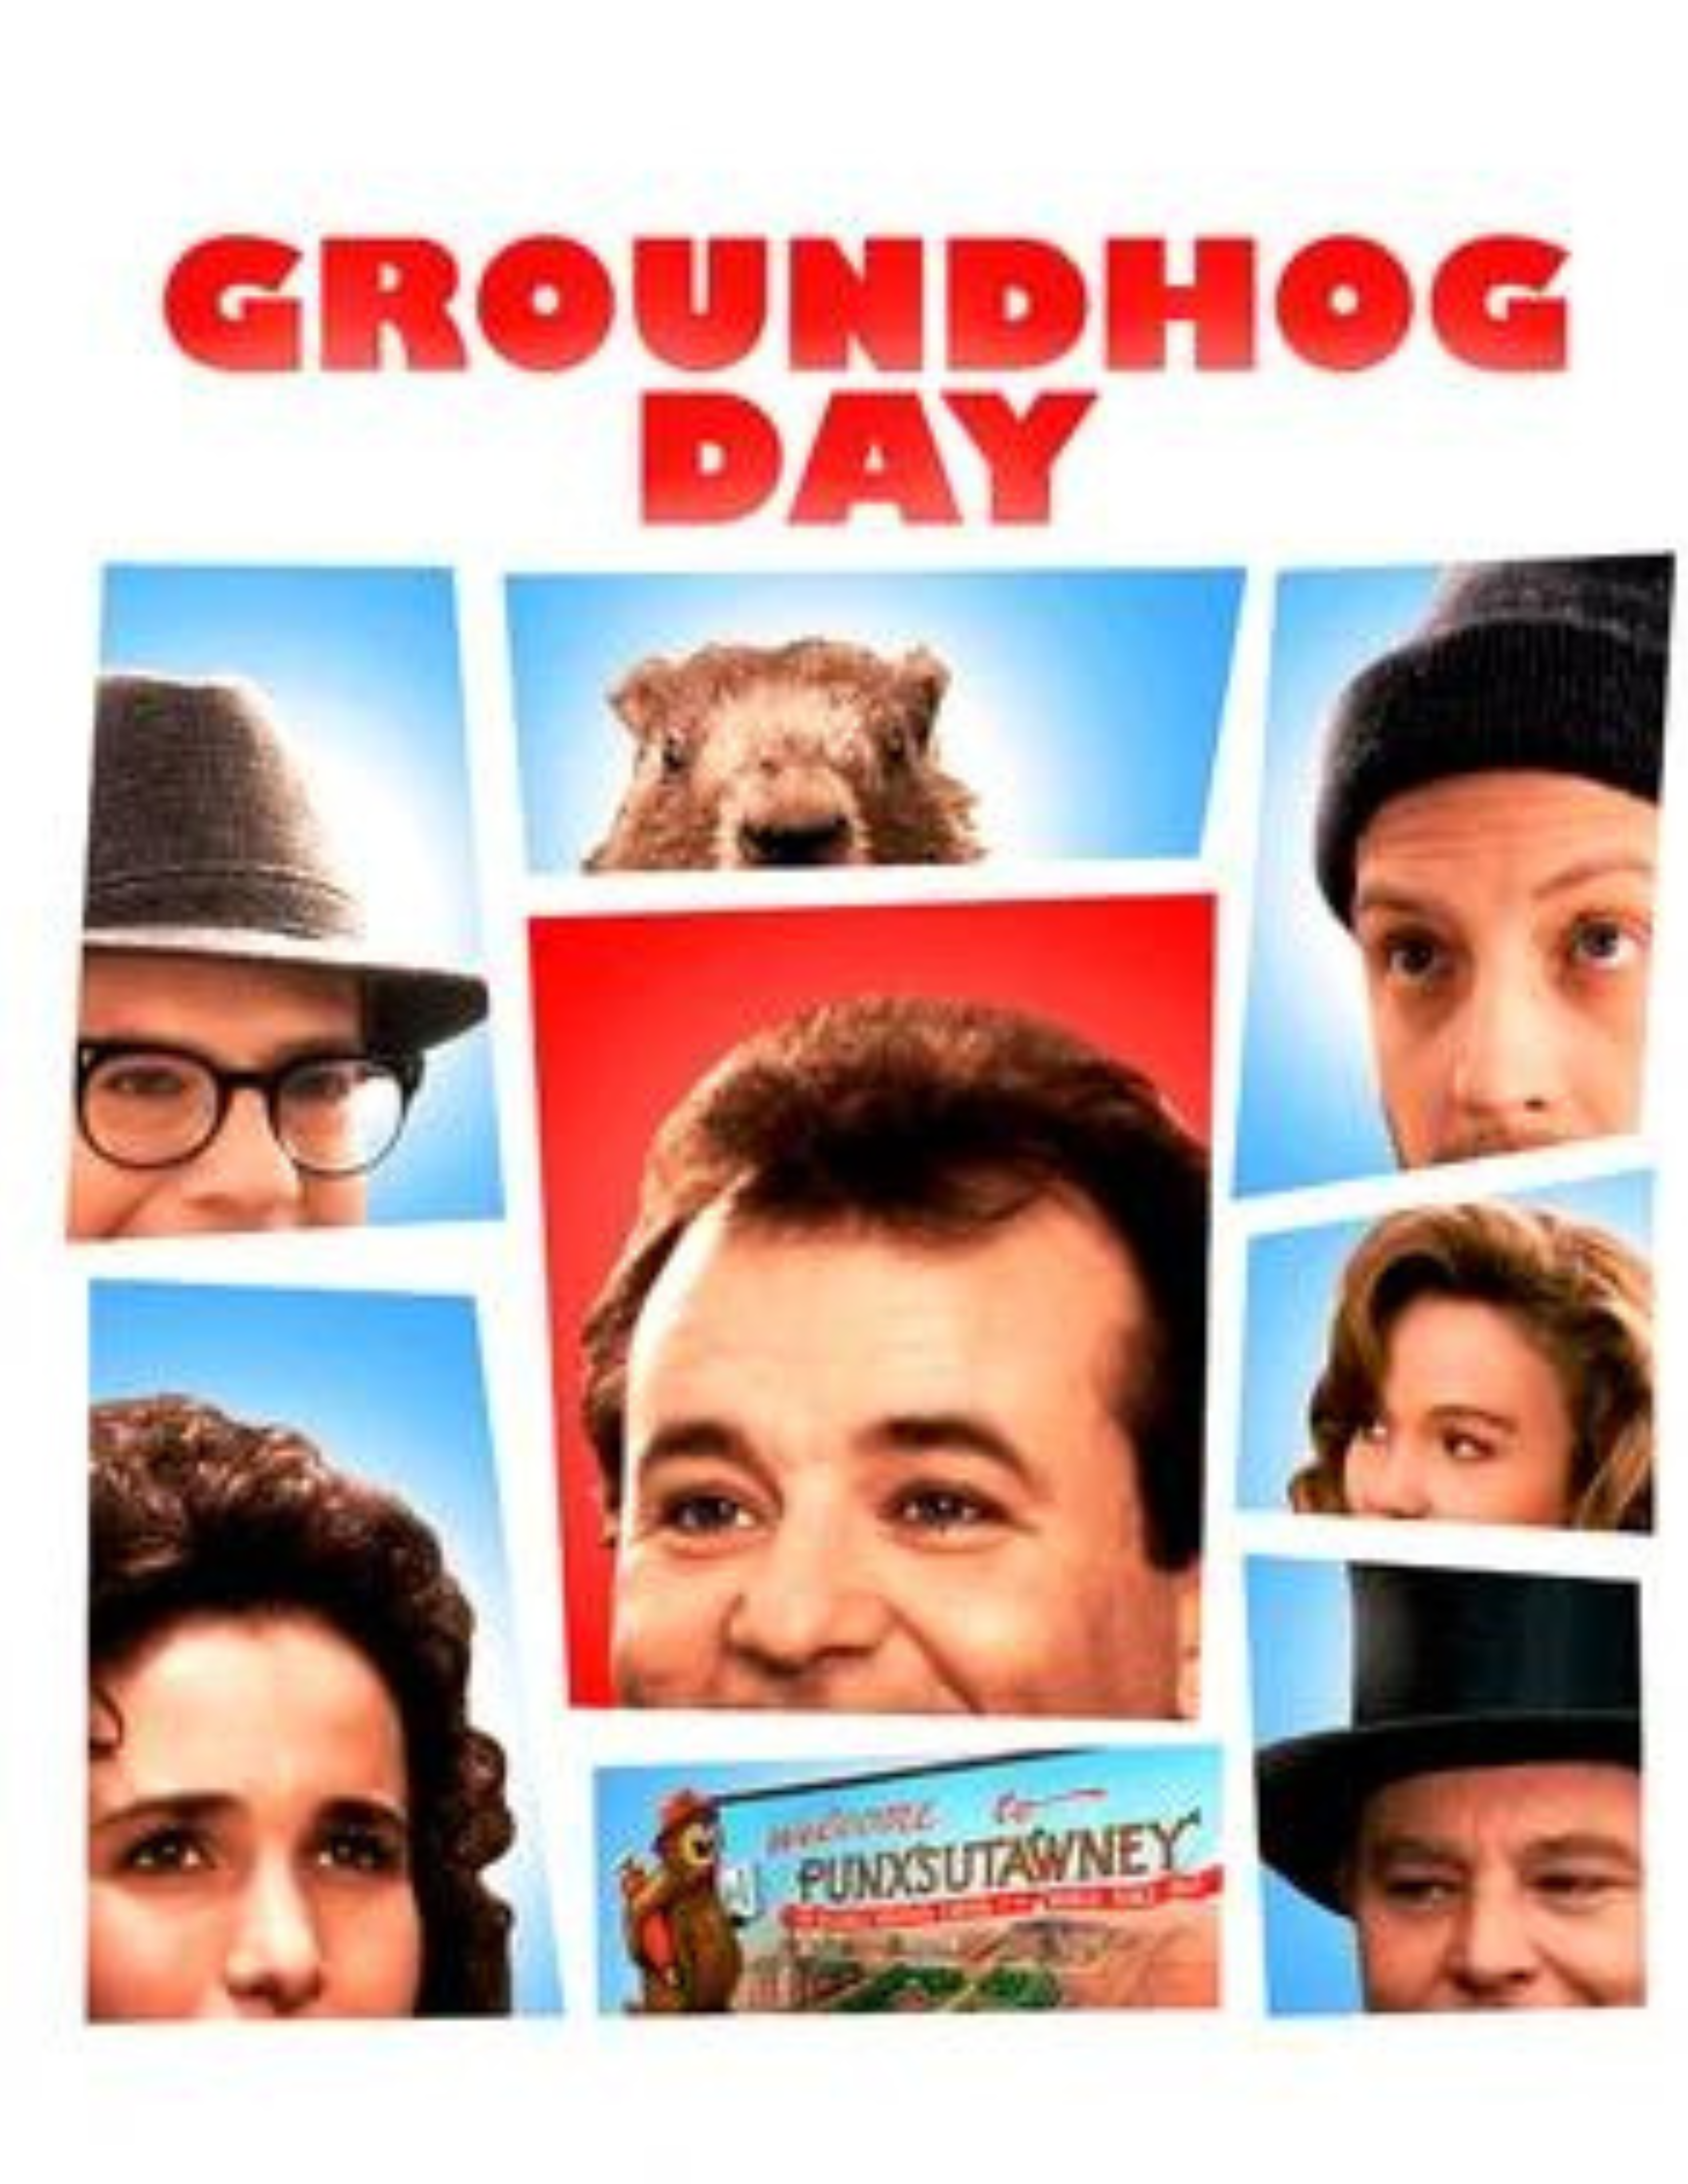 Groundhog Day Bill Murray and Andie MacDonald